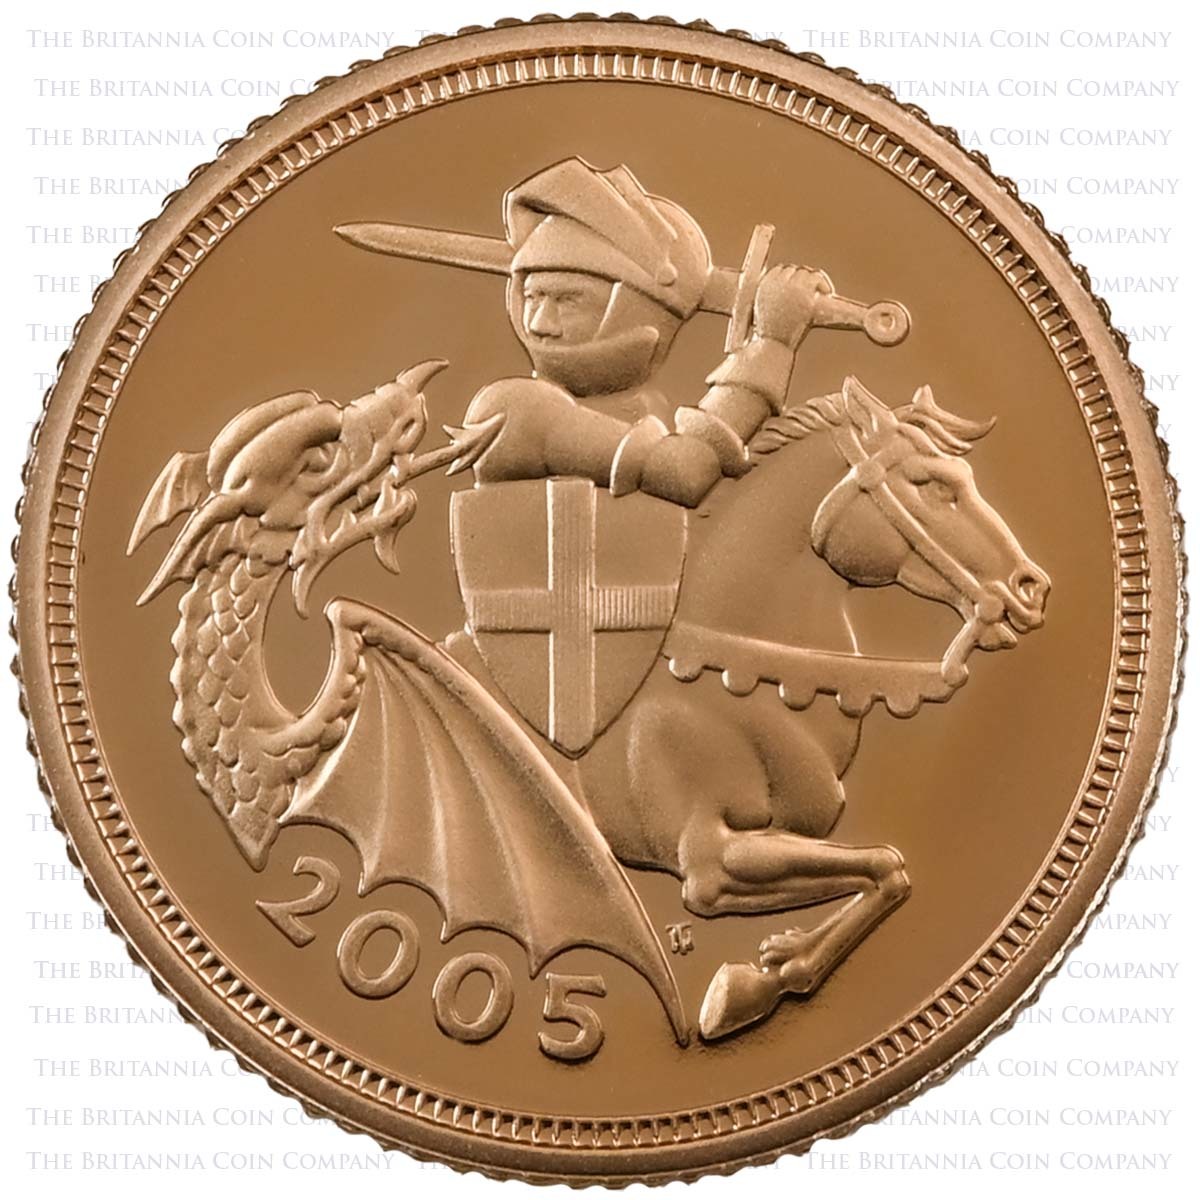 2005 Elizabeth II 3 Coin Gold Proof Sovereign Set Timothy Noad Reverse